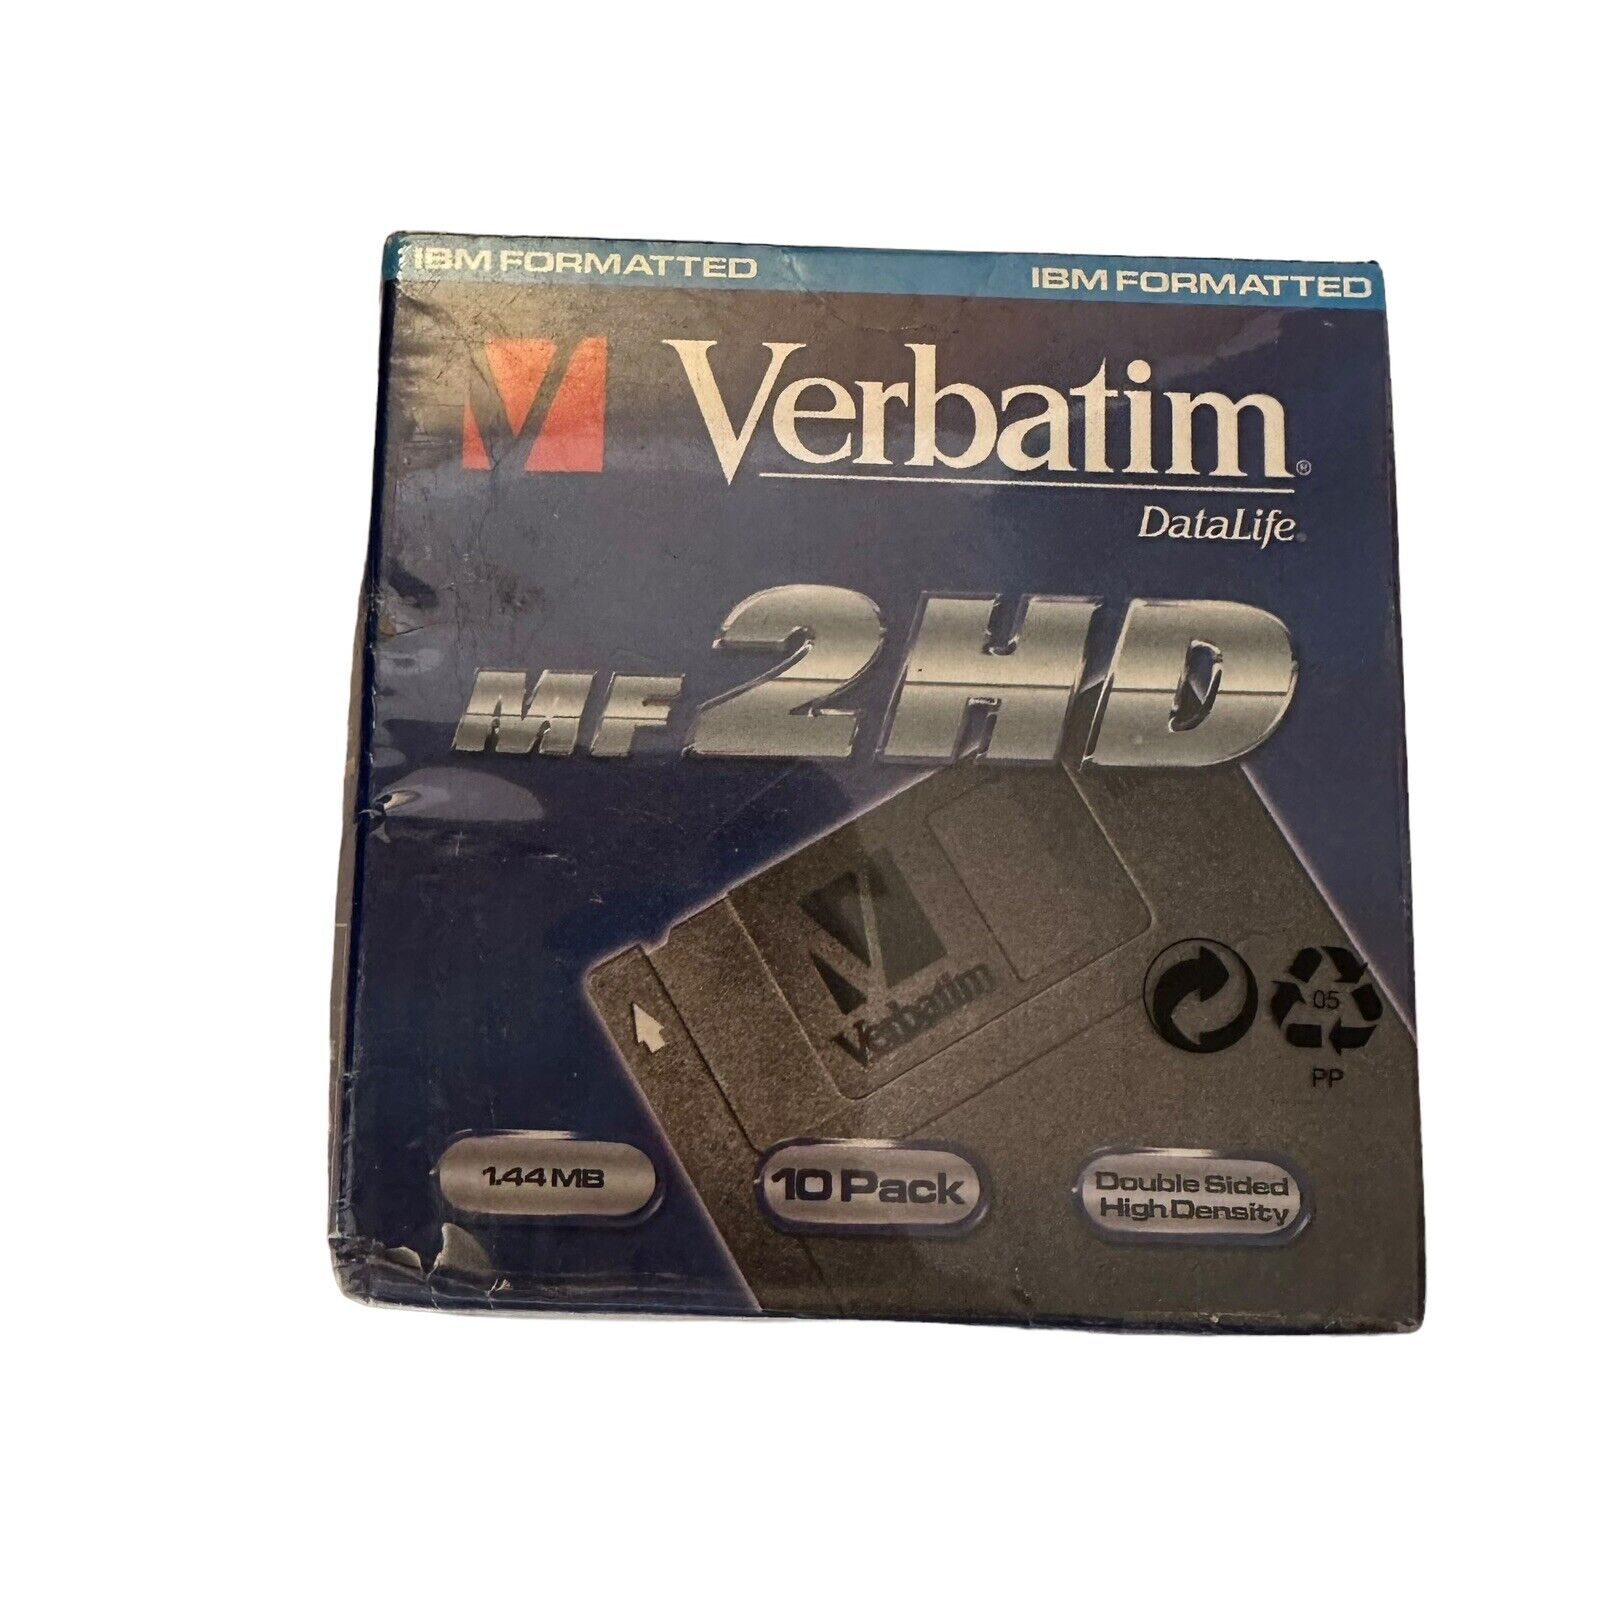 10 Pack Verbatim DataLife MF 2HD Formatted IBM 1.44MB 3.5 in. Microdisks